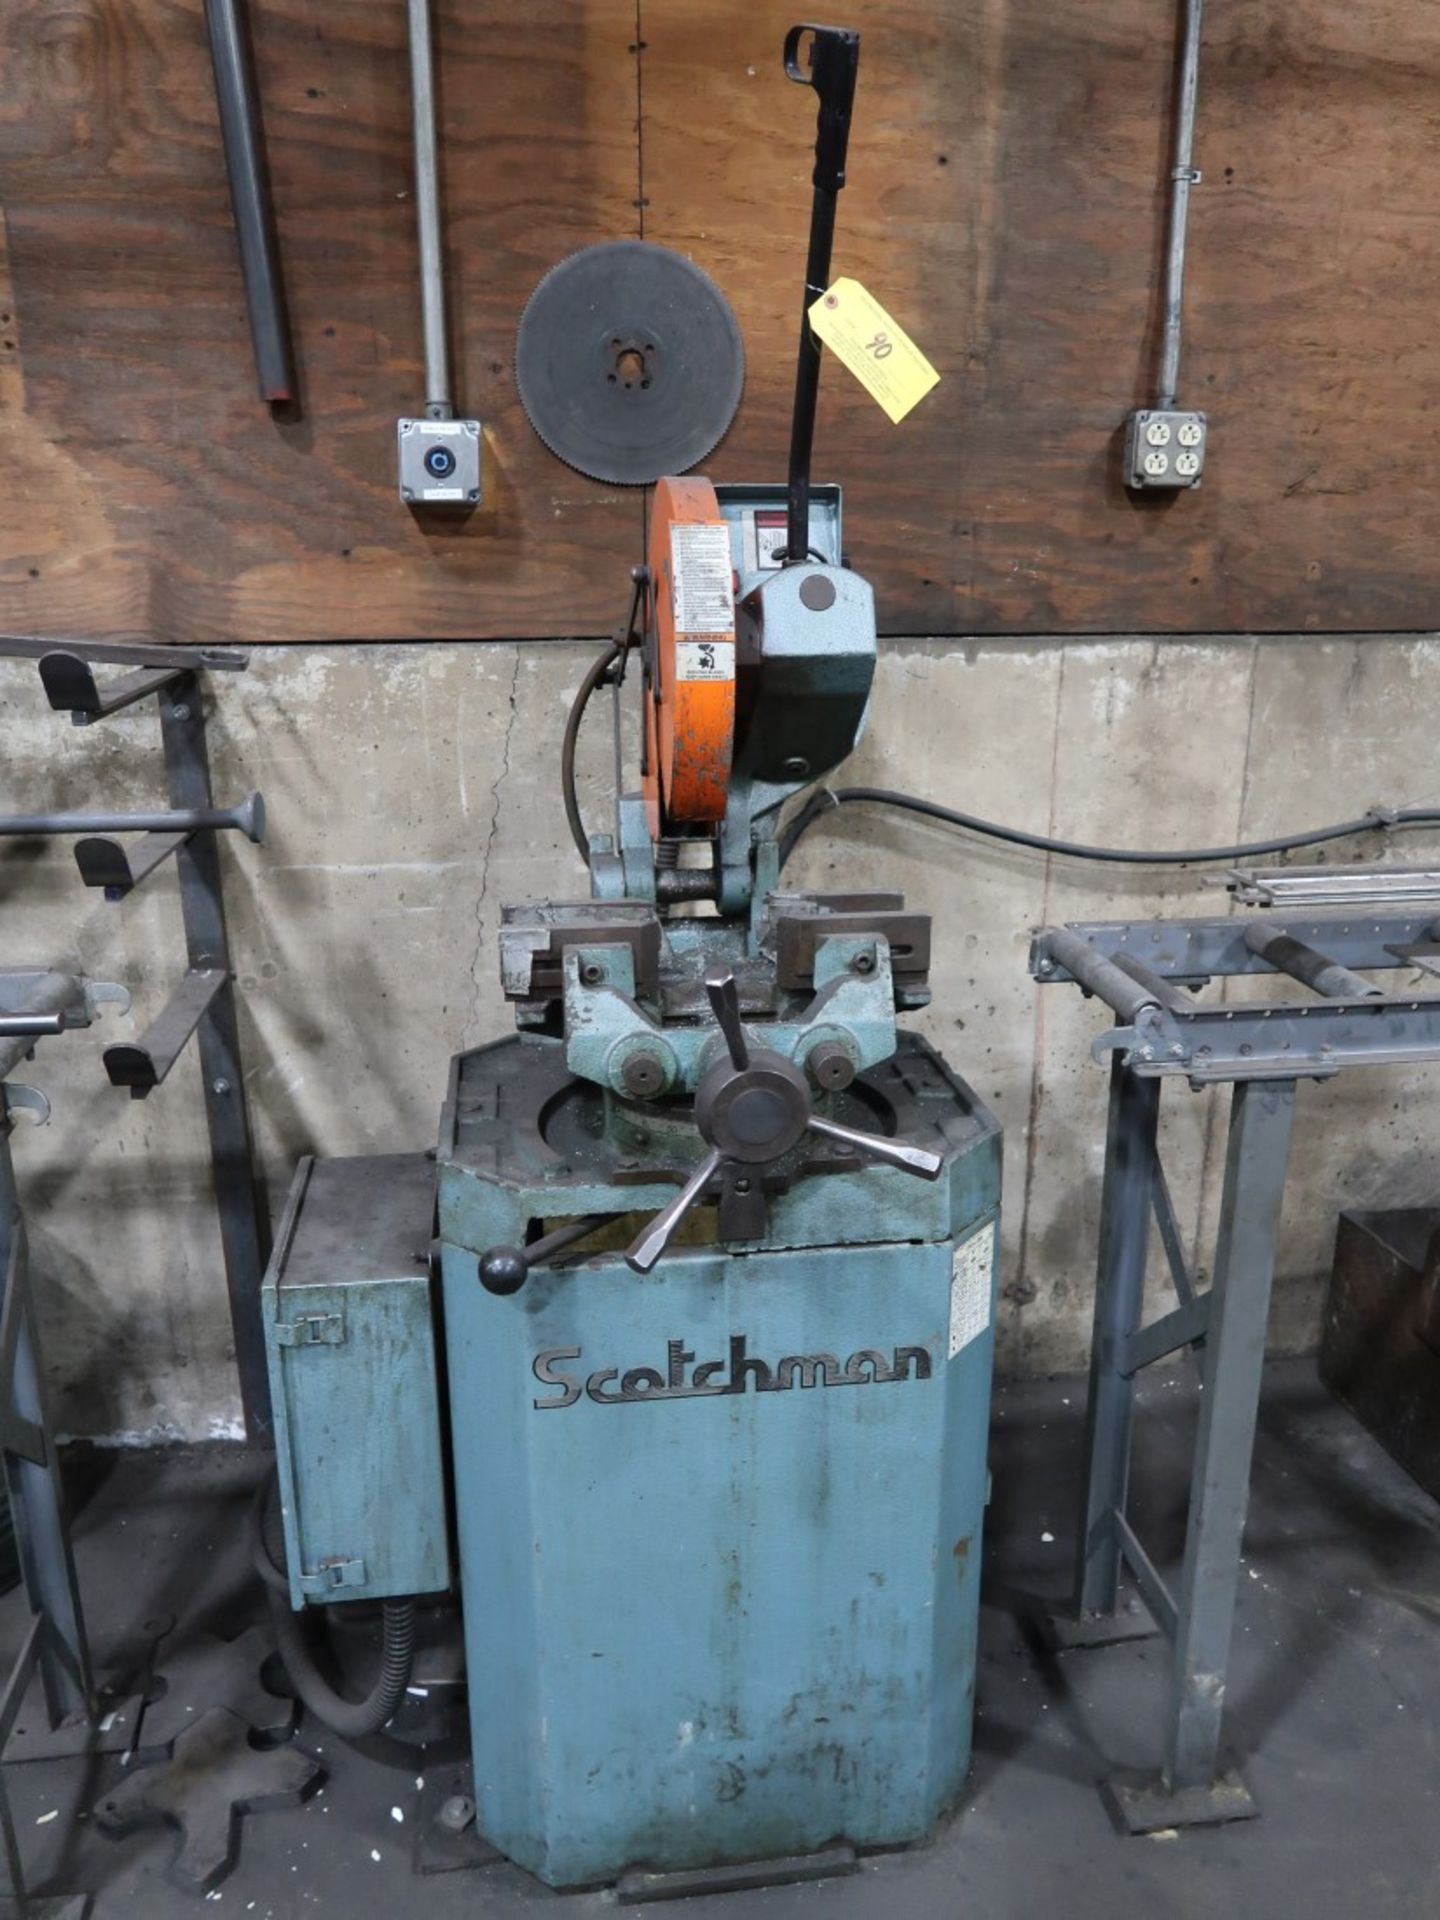 Scotchman CPO-VSLT-350 Abrasive Chop Saw, 5 HP w/ Conveyor - Image 2 of 3